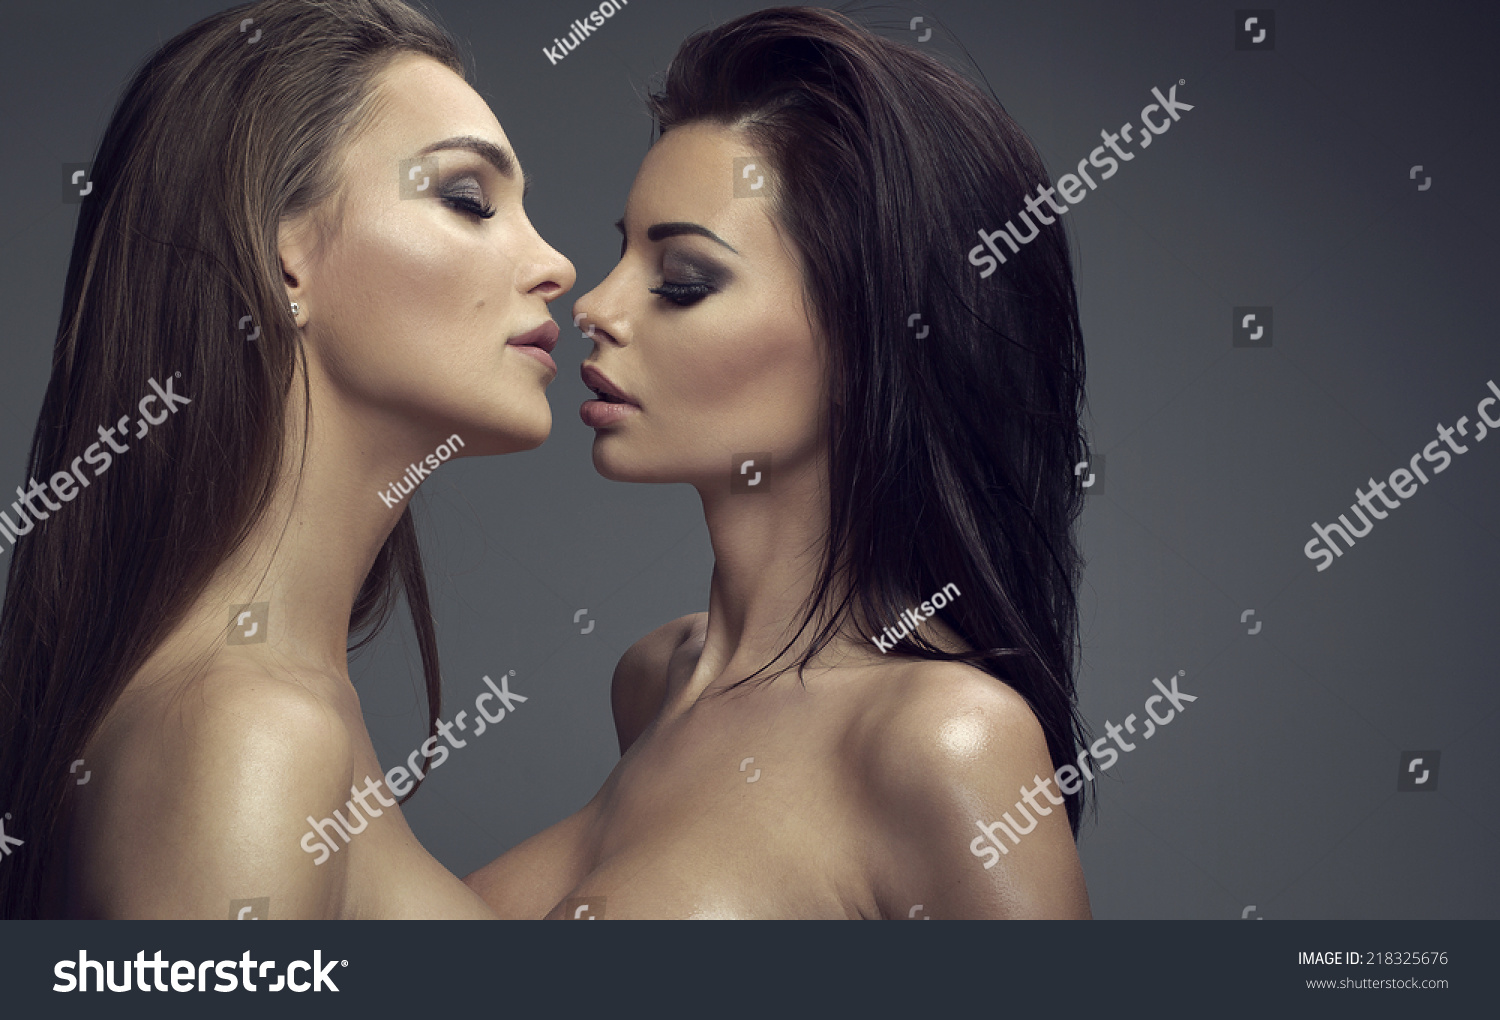 Hot Women Kissing Eachother